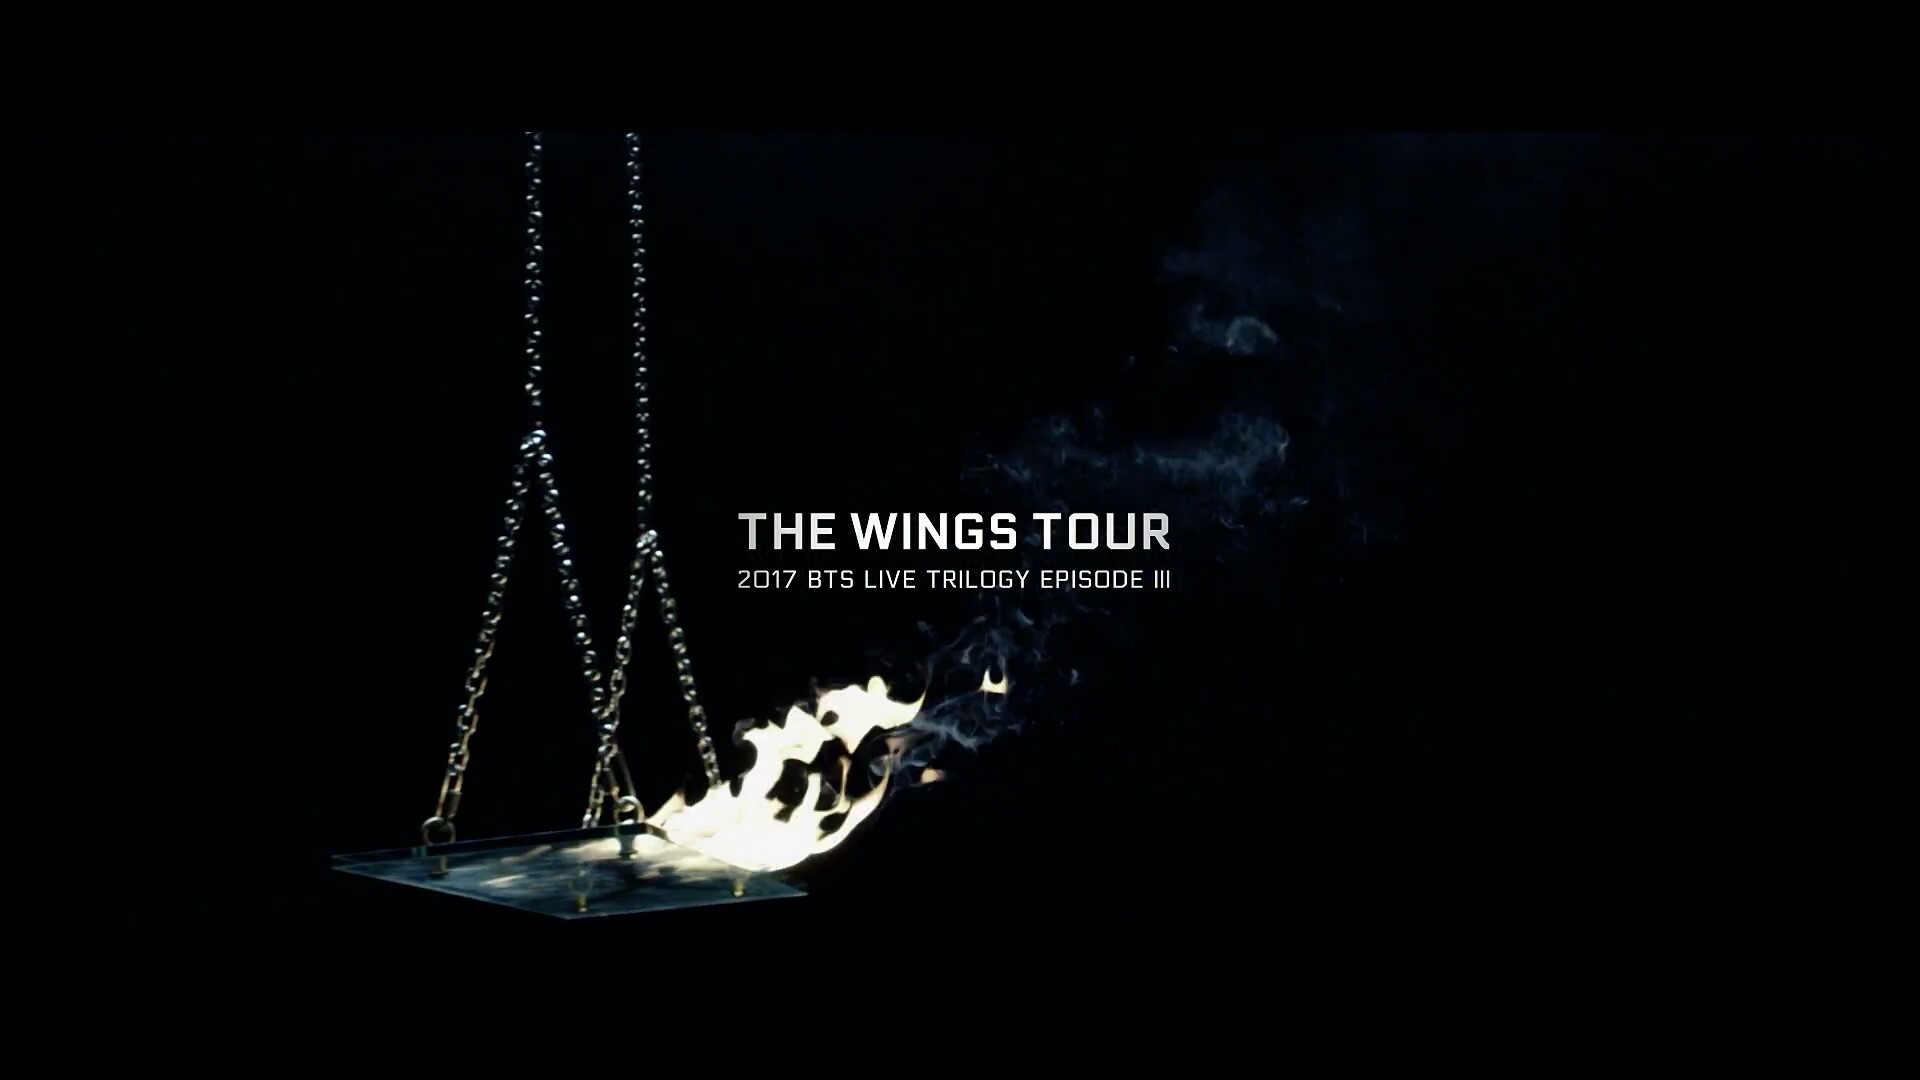 1920x1080 2017 BTS LIVE TRILOGY EPISODE III THE WINGS TOUR Trailer â¤ #BTS #ë°©íìëë¨